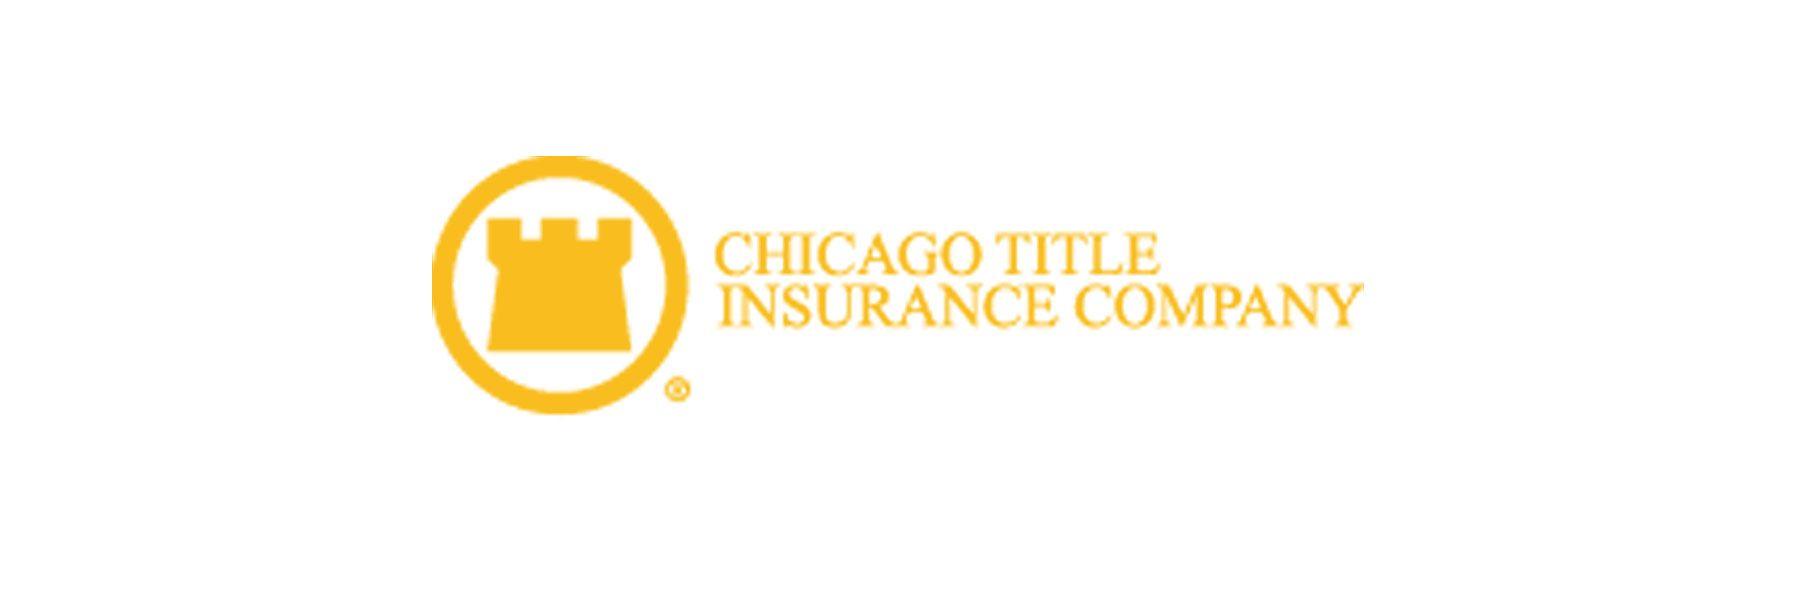 Chicago Title Logo - Chicago Title Insurance Company - Downtown Greensboro